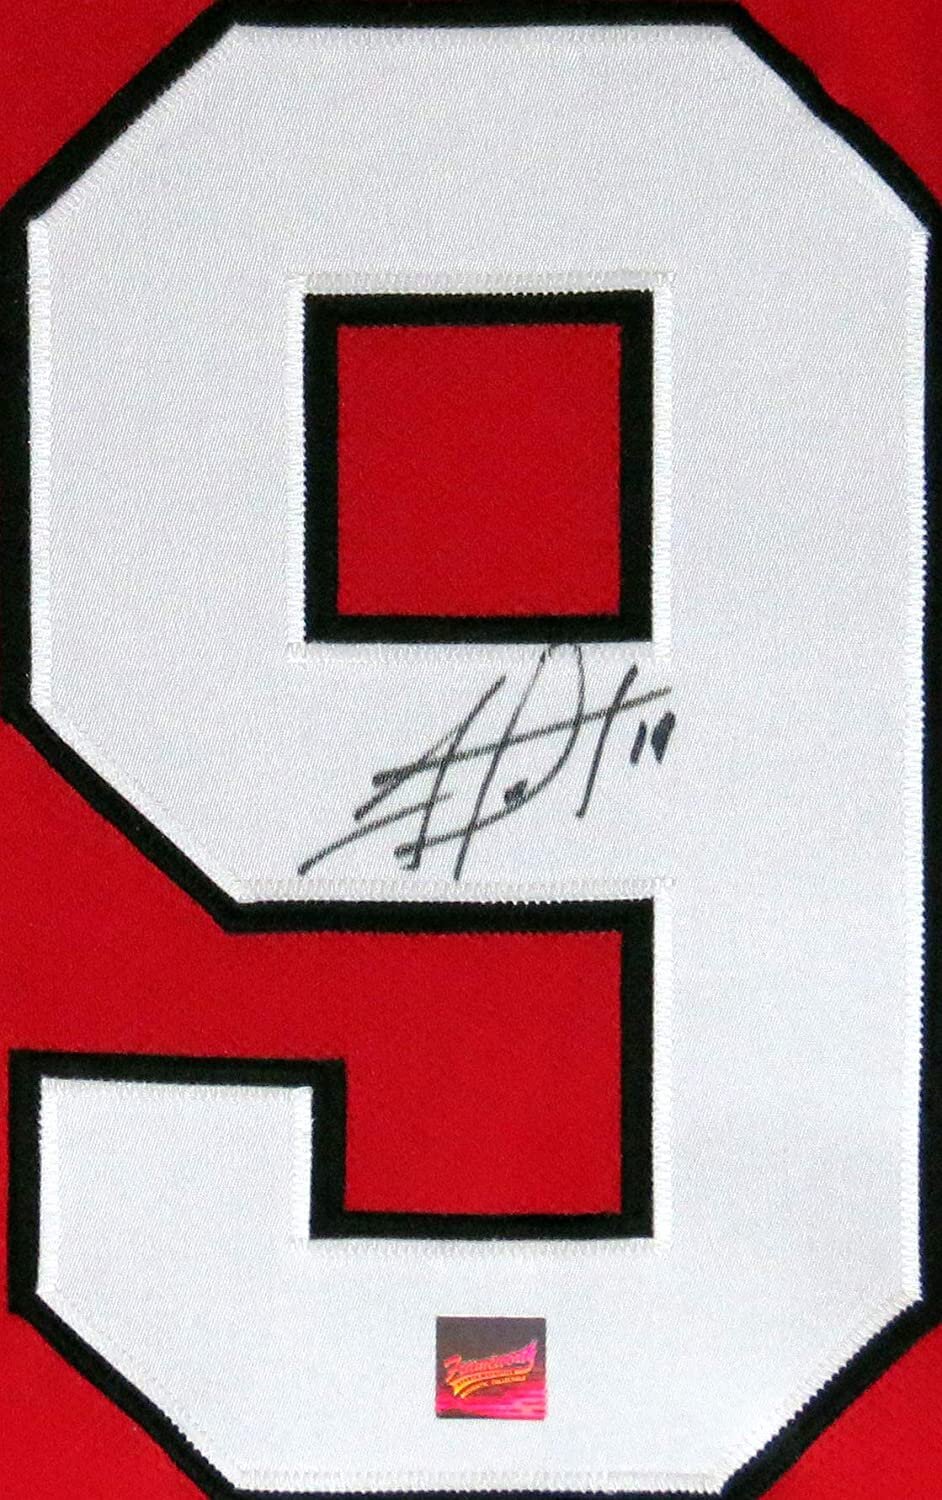 jonathan toews autographed jersey